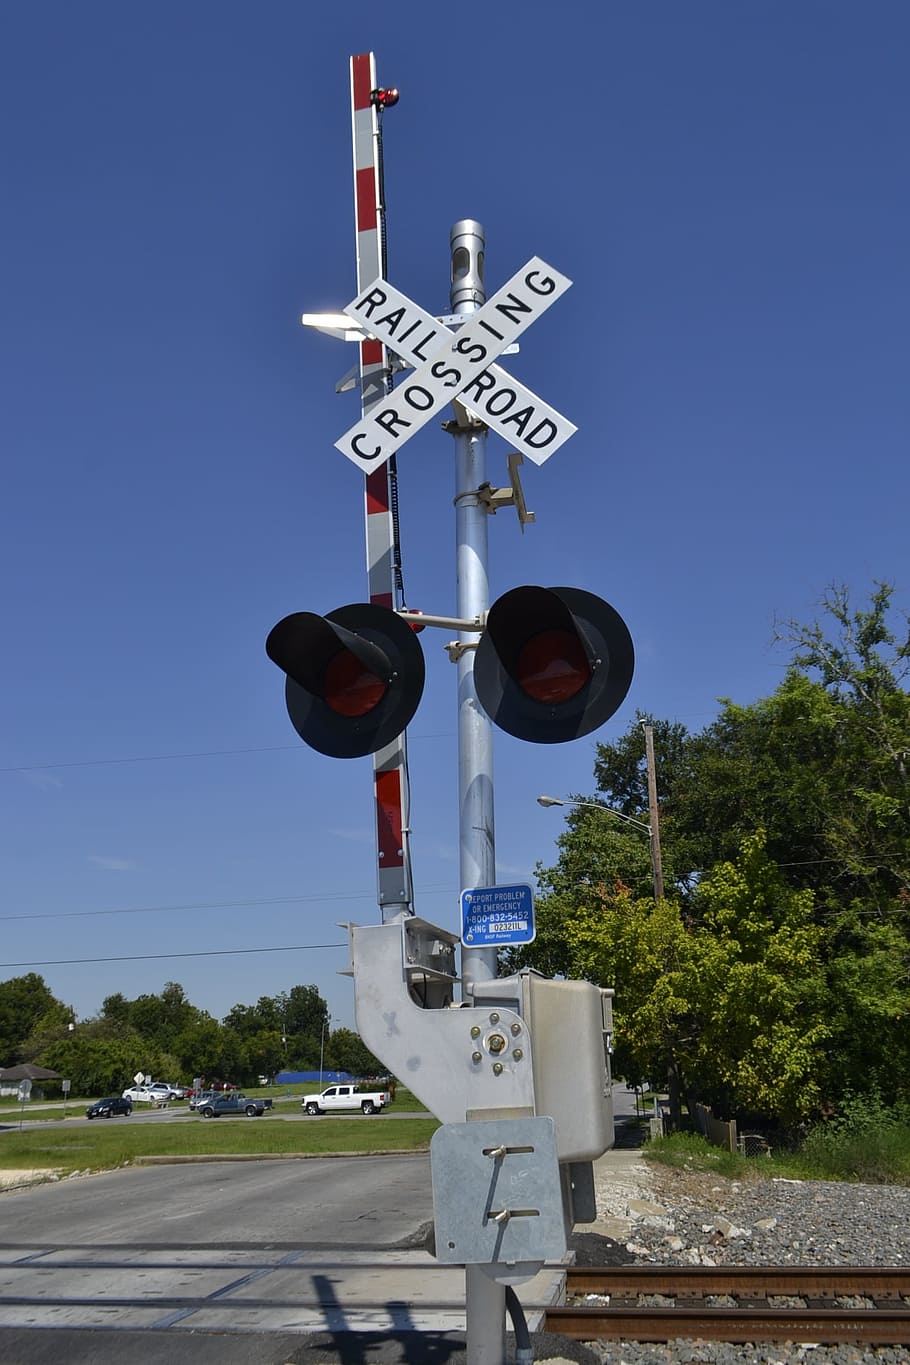 sinyal jalan rel houston texas, rel kereta api, jalan rel, jalan, kereta api, metro, transportasi, rel, stasiun, teknologi